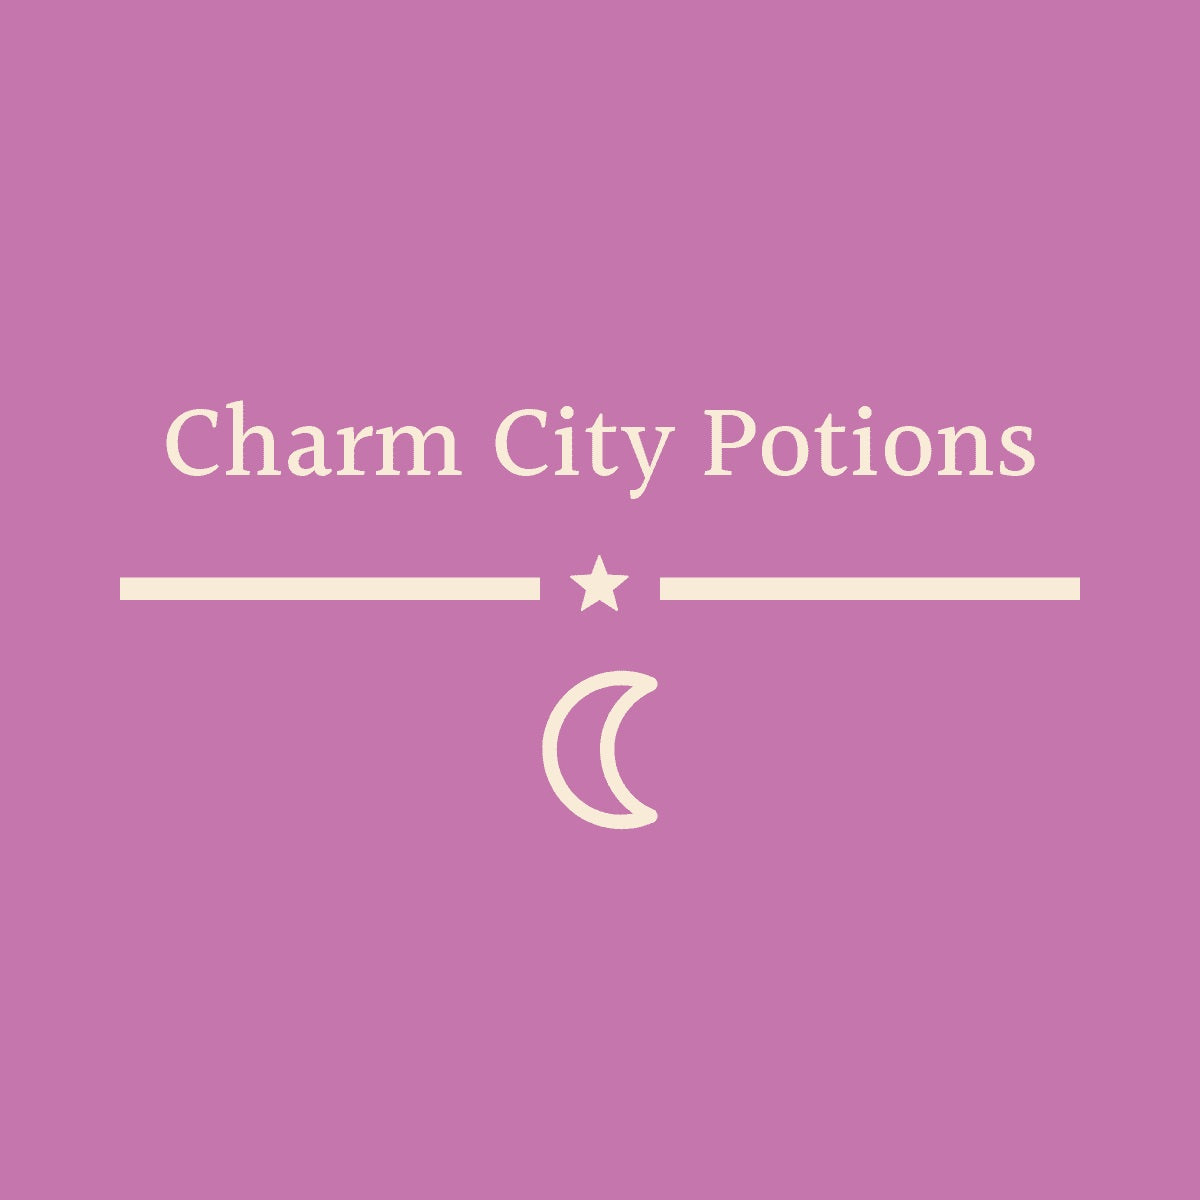 Charm City Potions